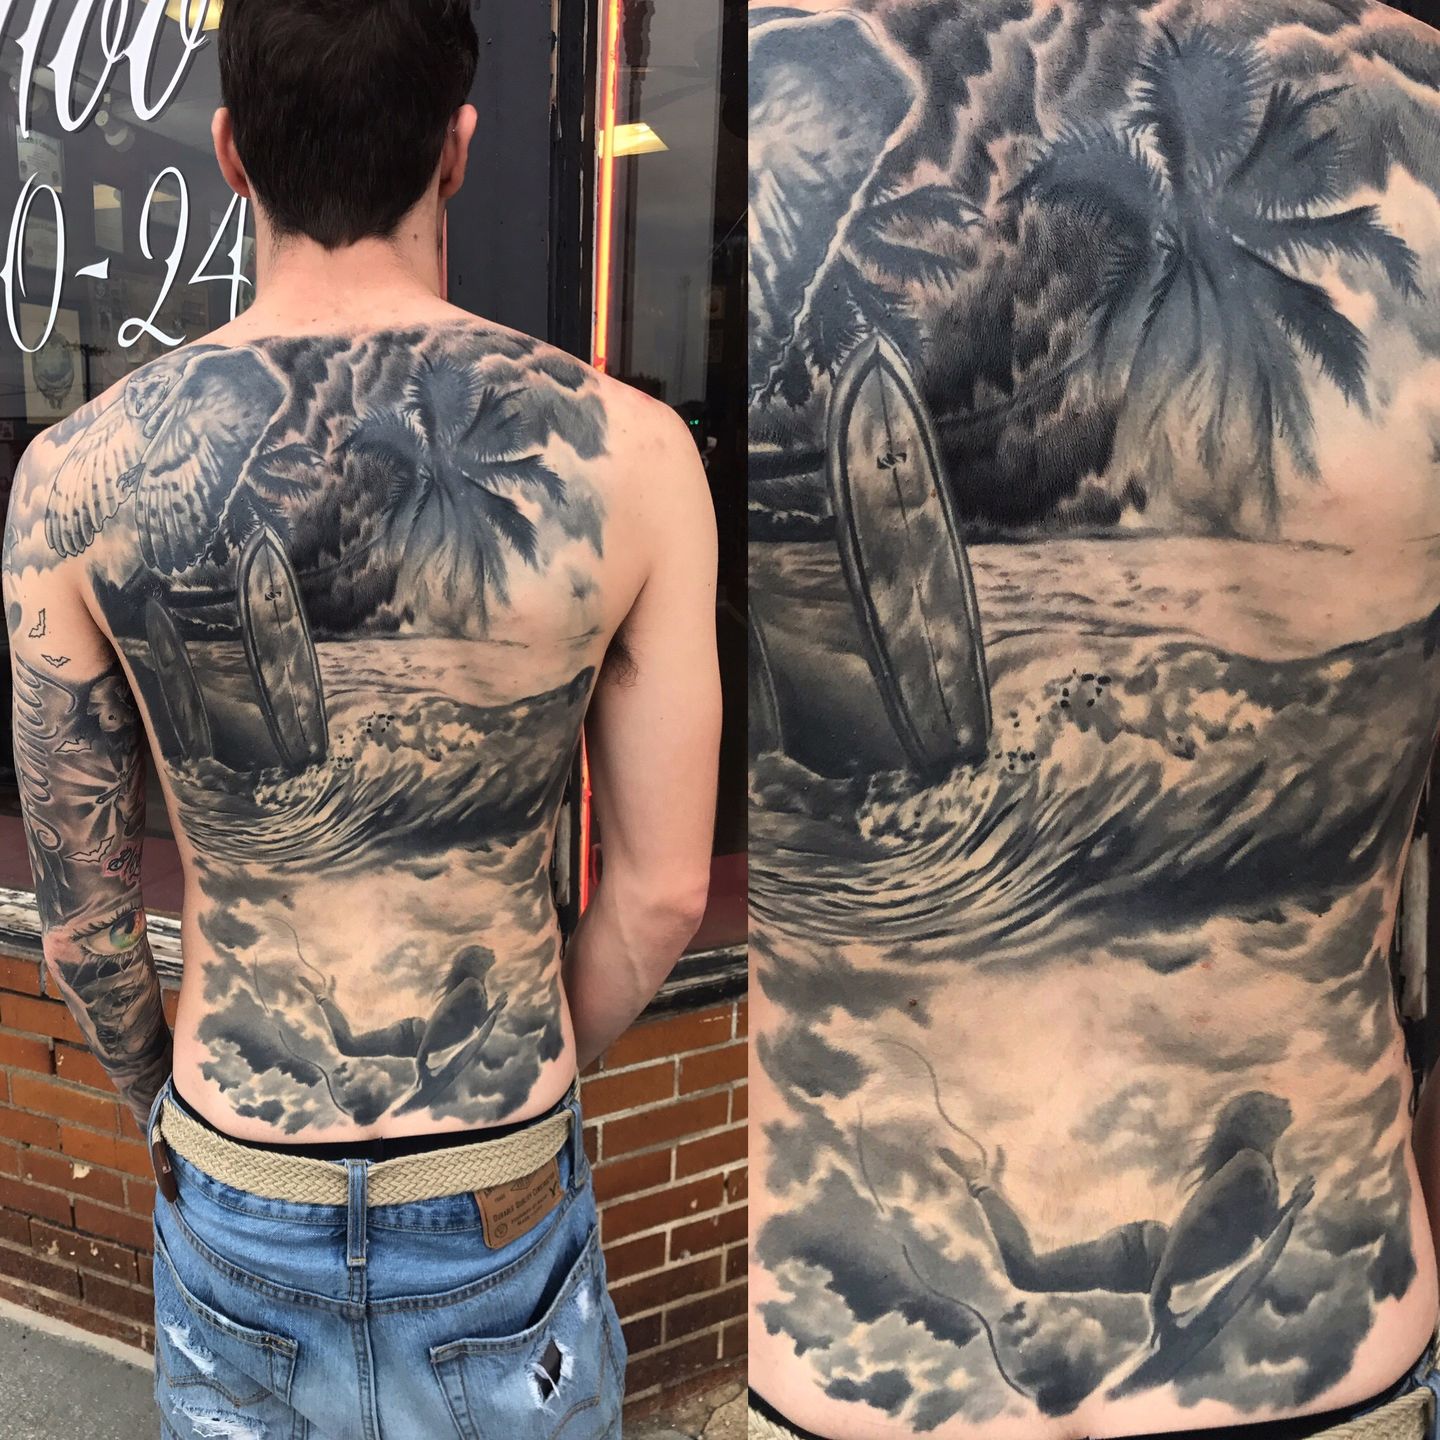 Stylish Palm Tree Tattoo Design